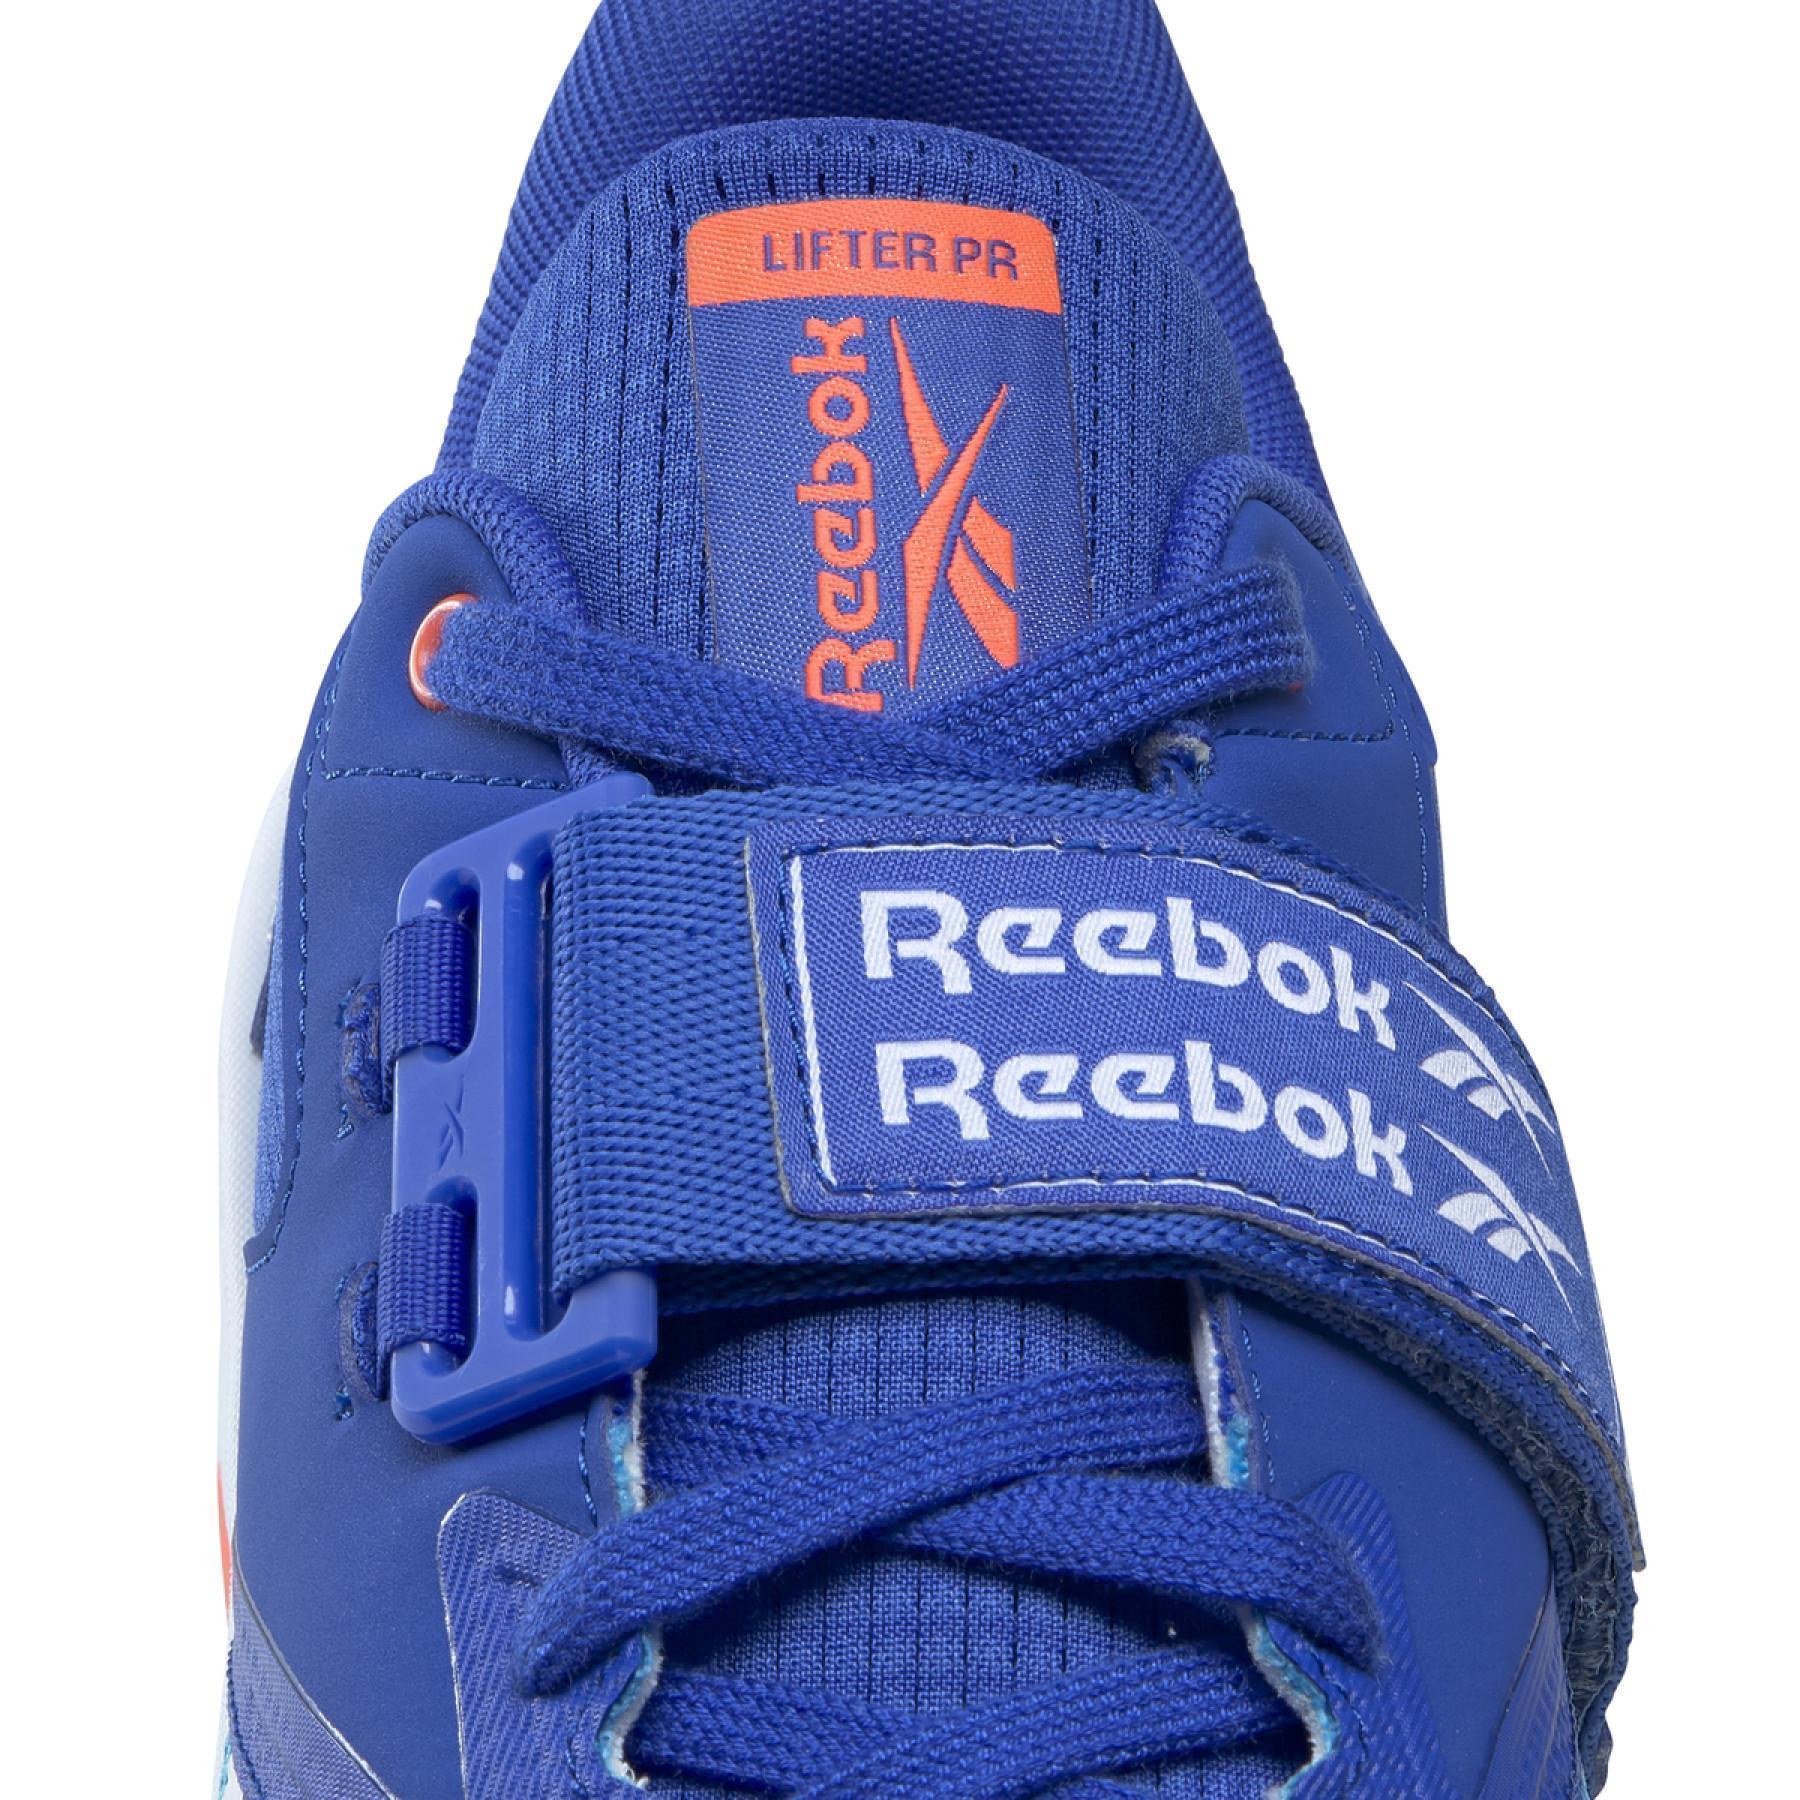 Zapatos Reebok Lifter PR II